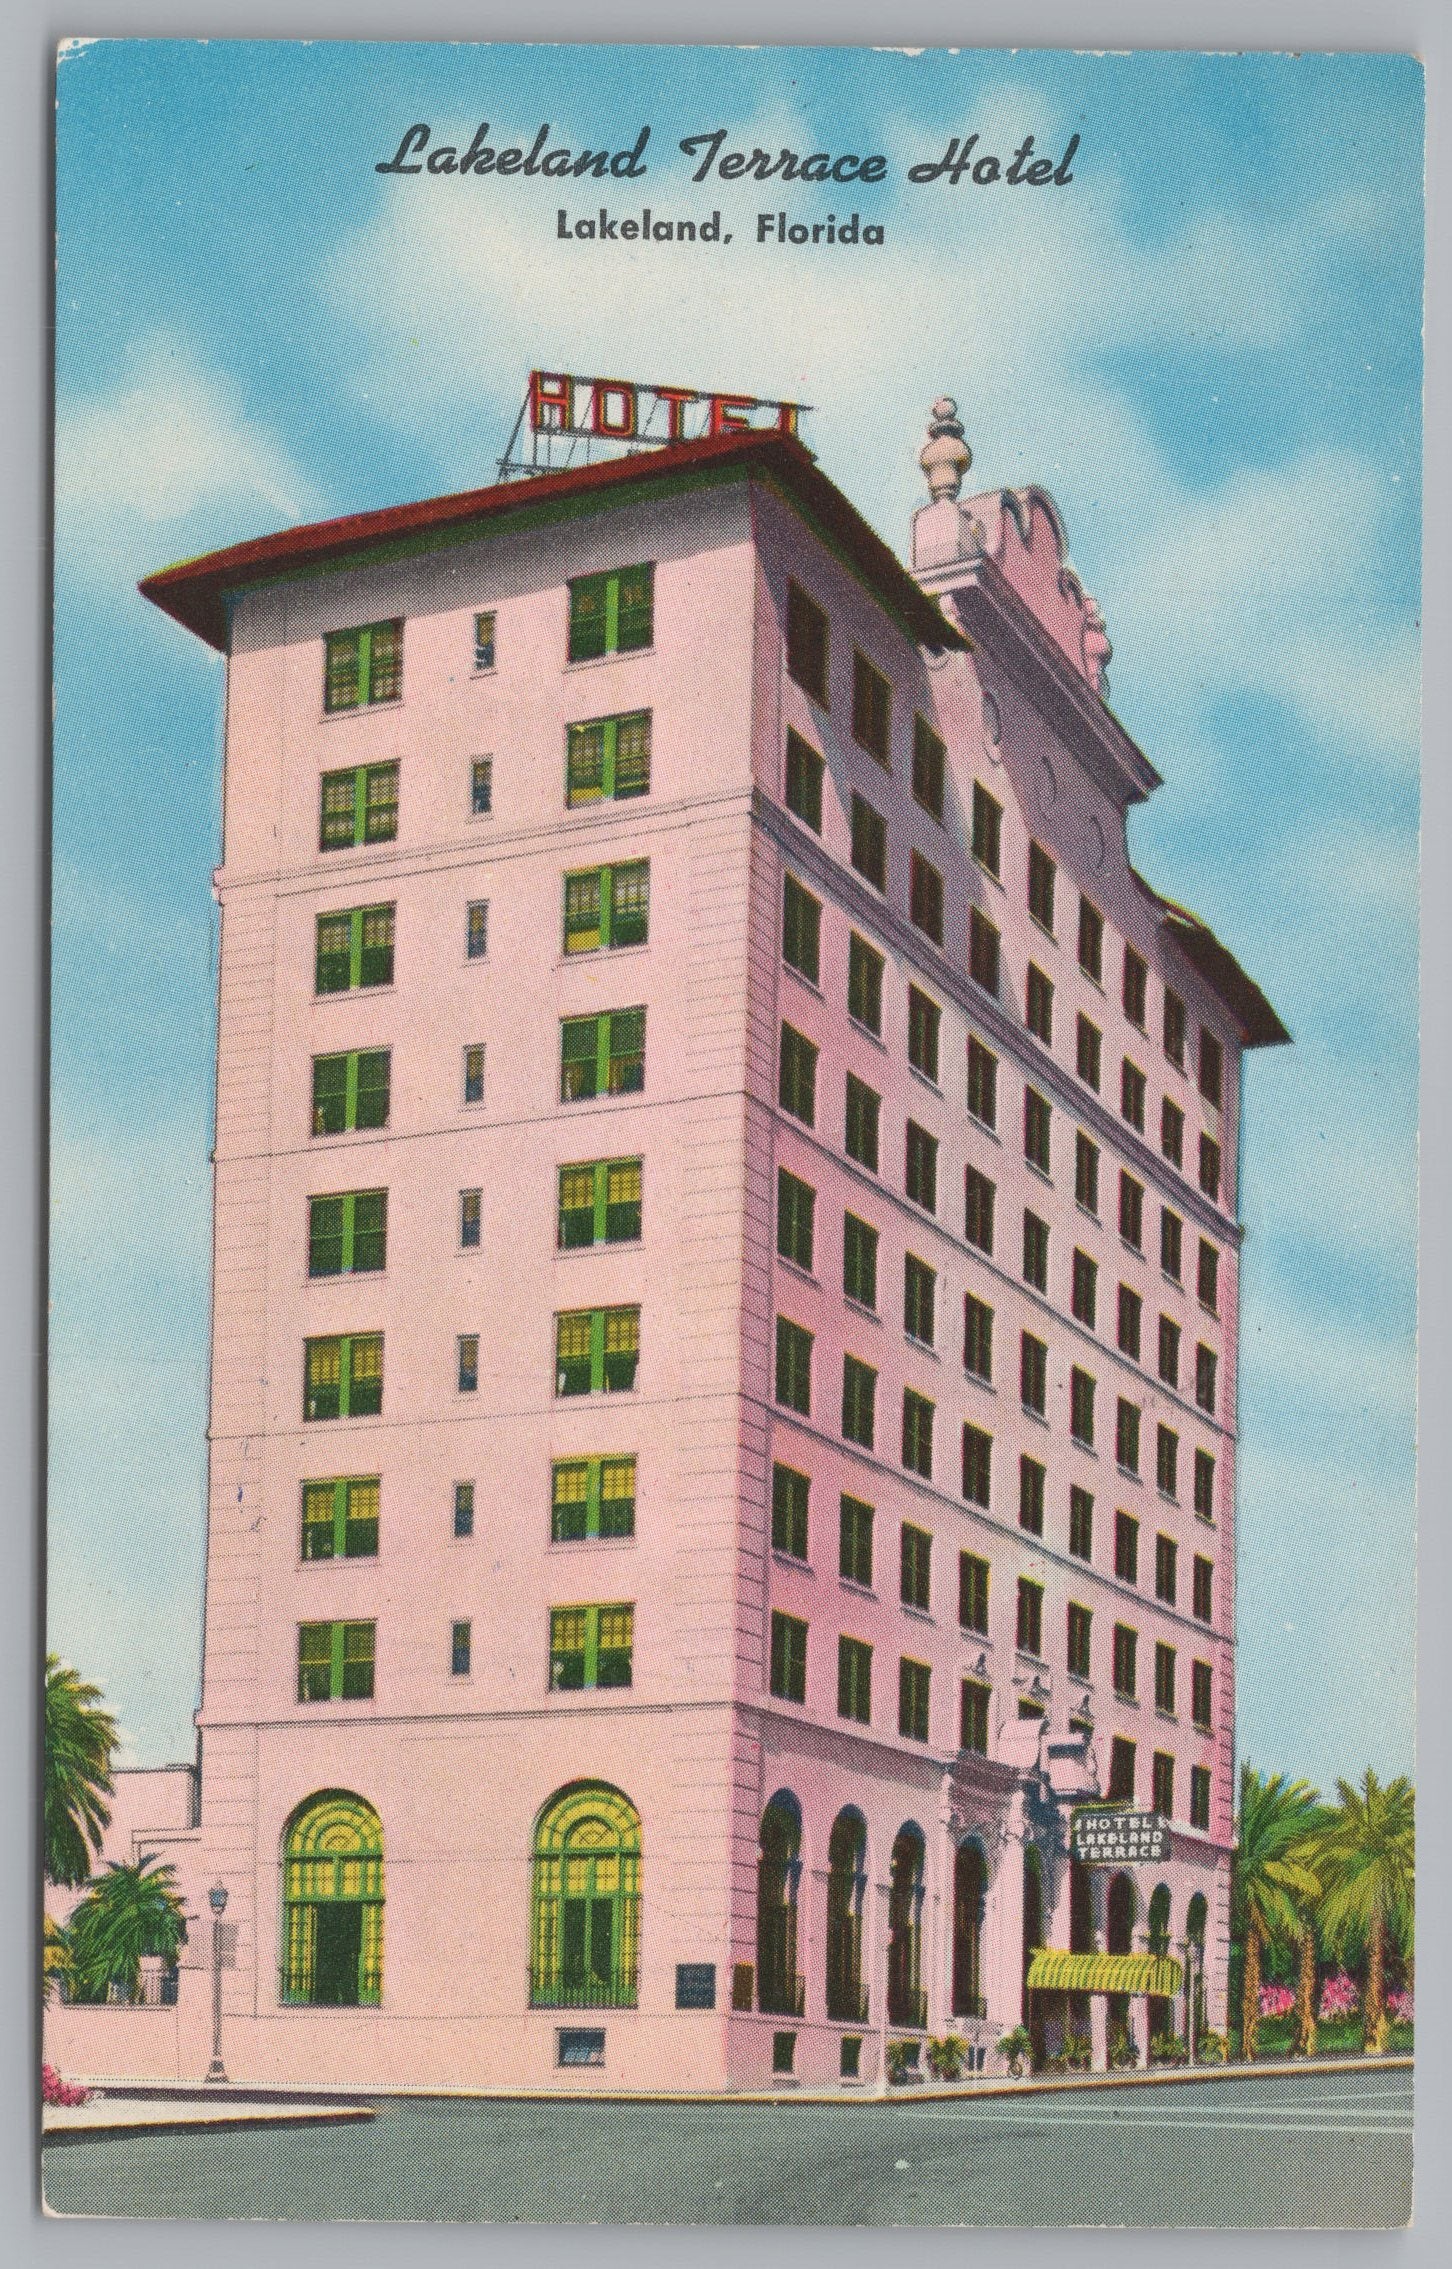 Lakeland Terrace Hotel, Lakeland, Florida, Vintage Post Card.